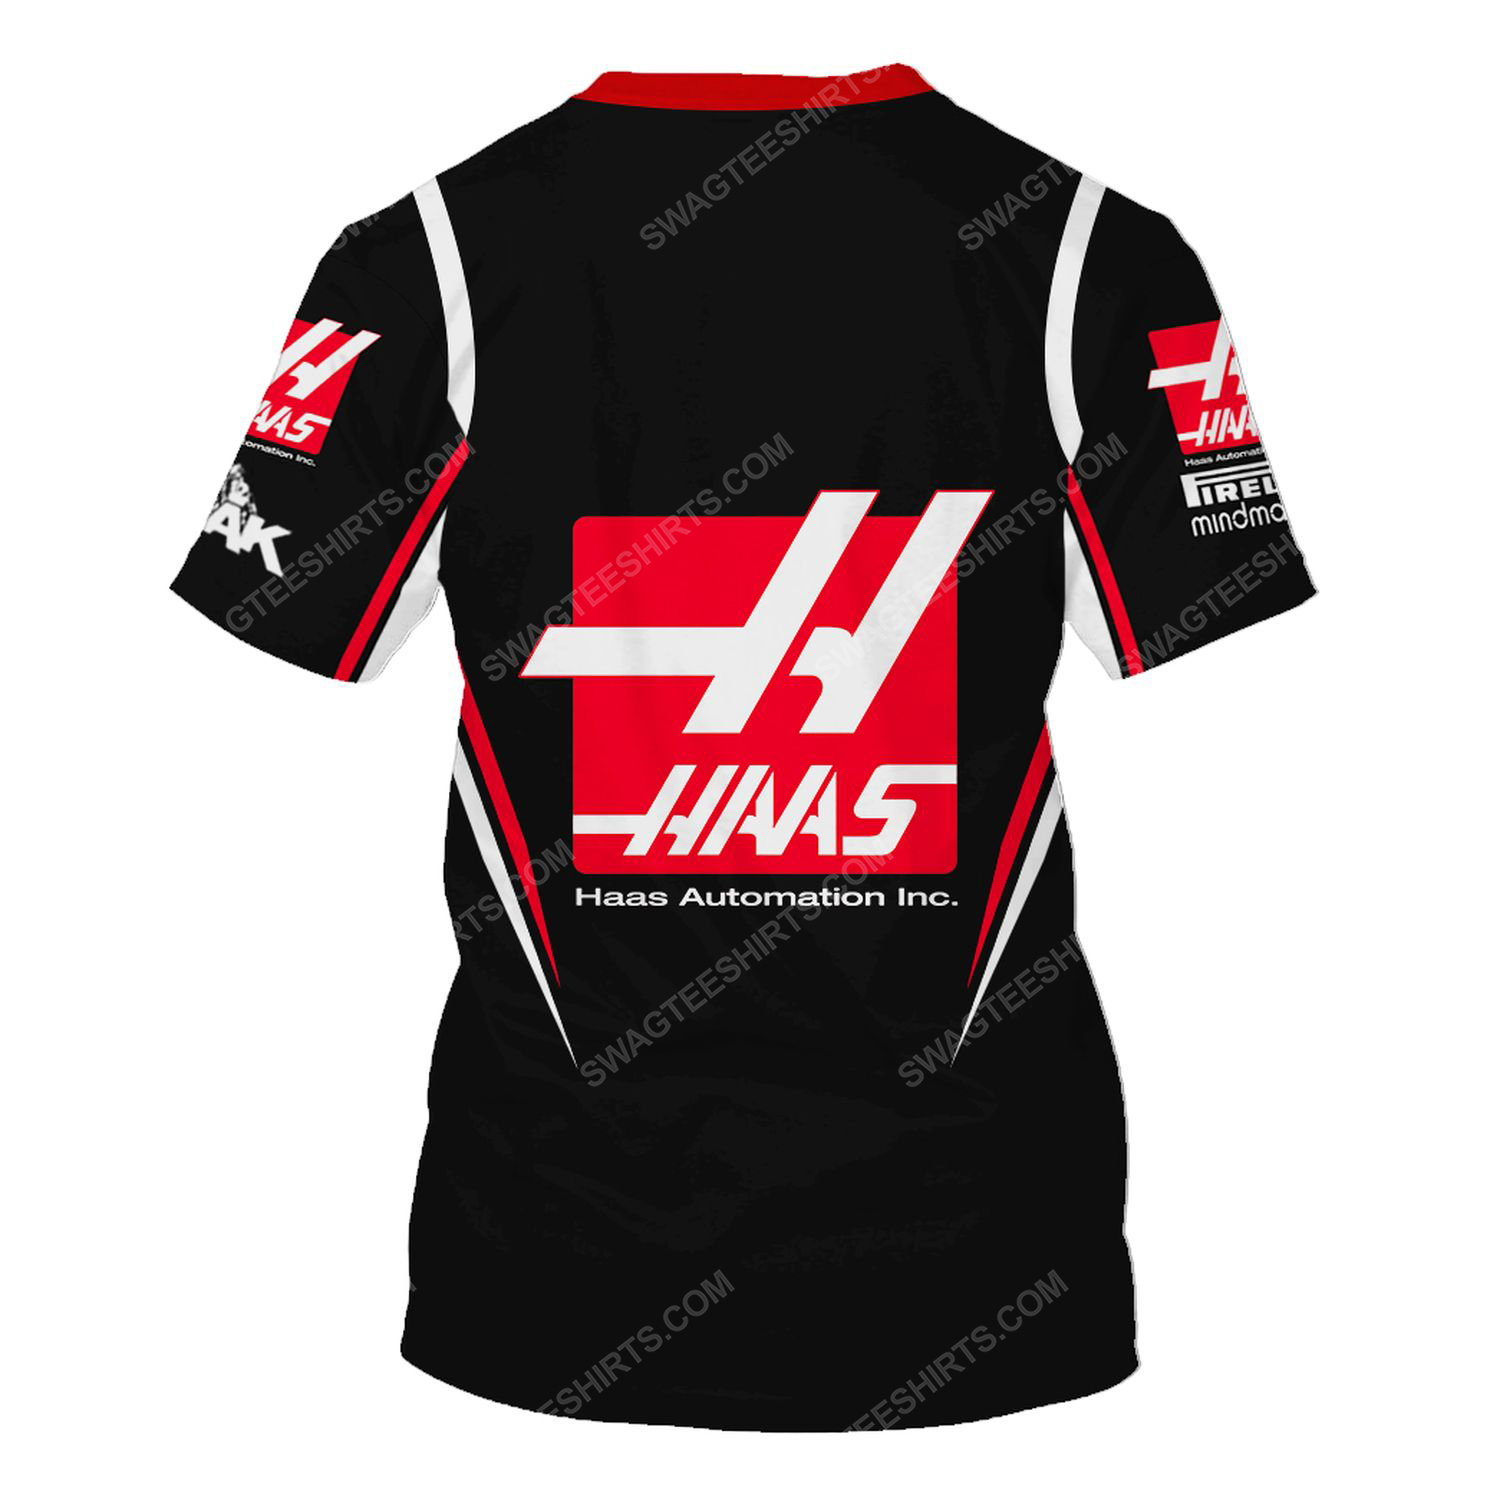 Haas automation inc racing team motorsport full printing tshirt - back